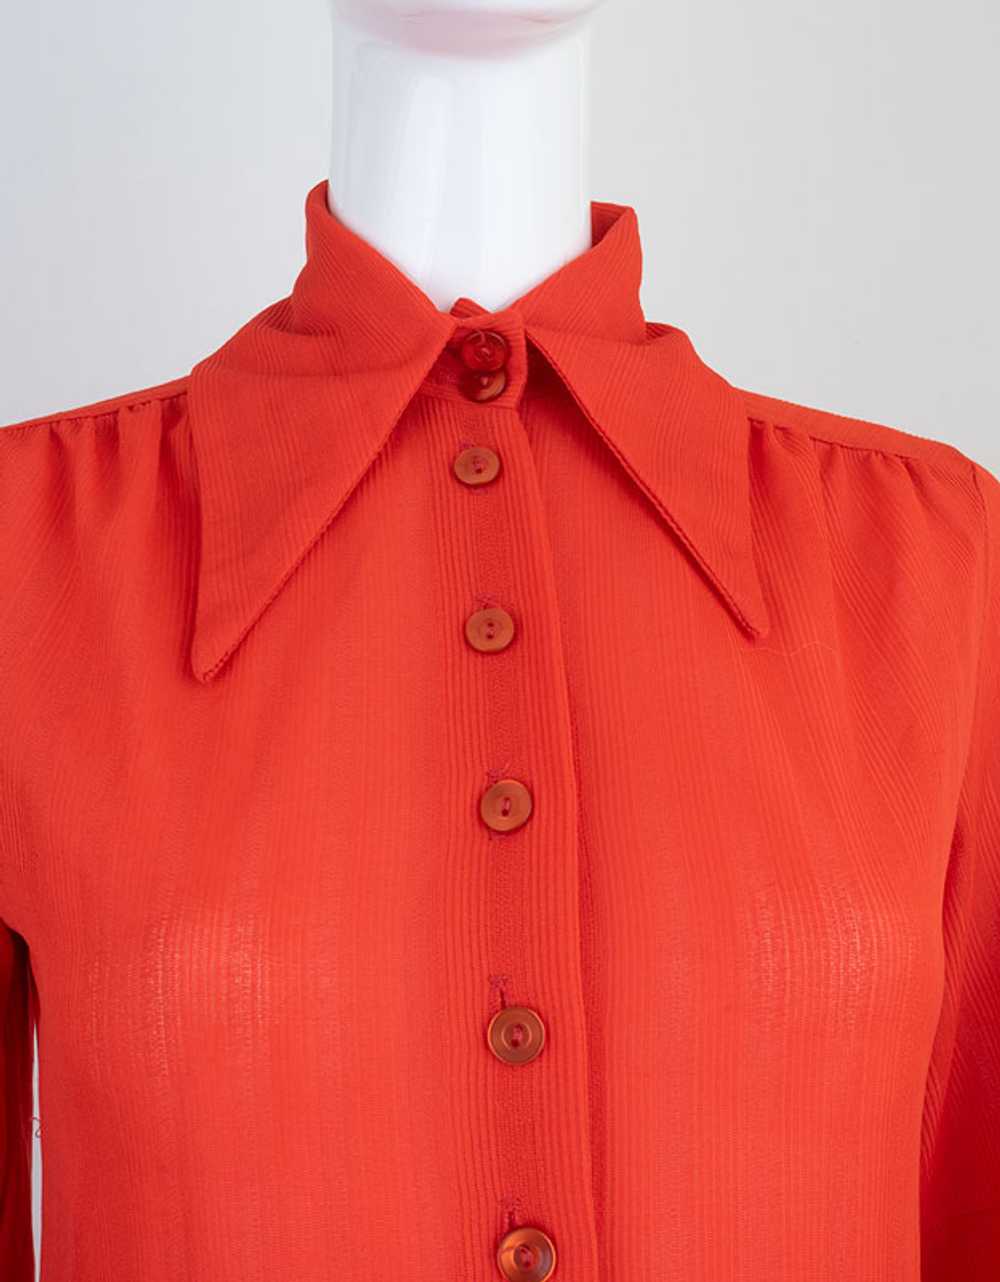 Red 1970s Bodysuit - image 4